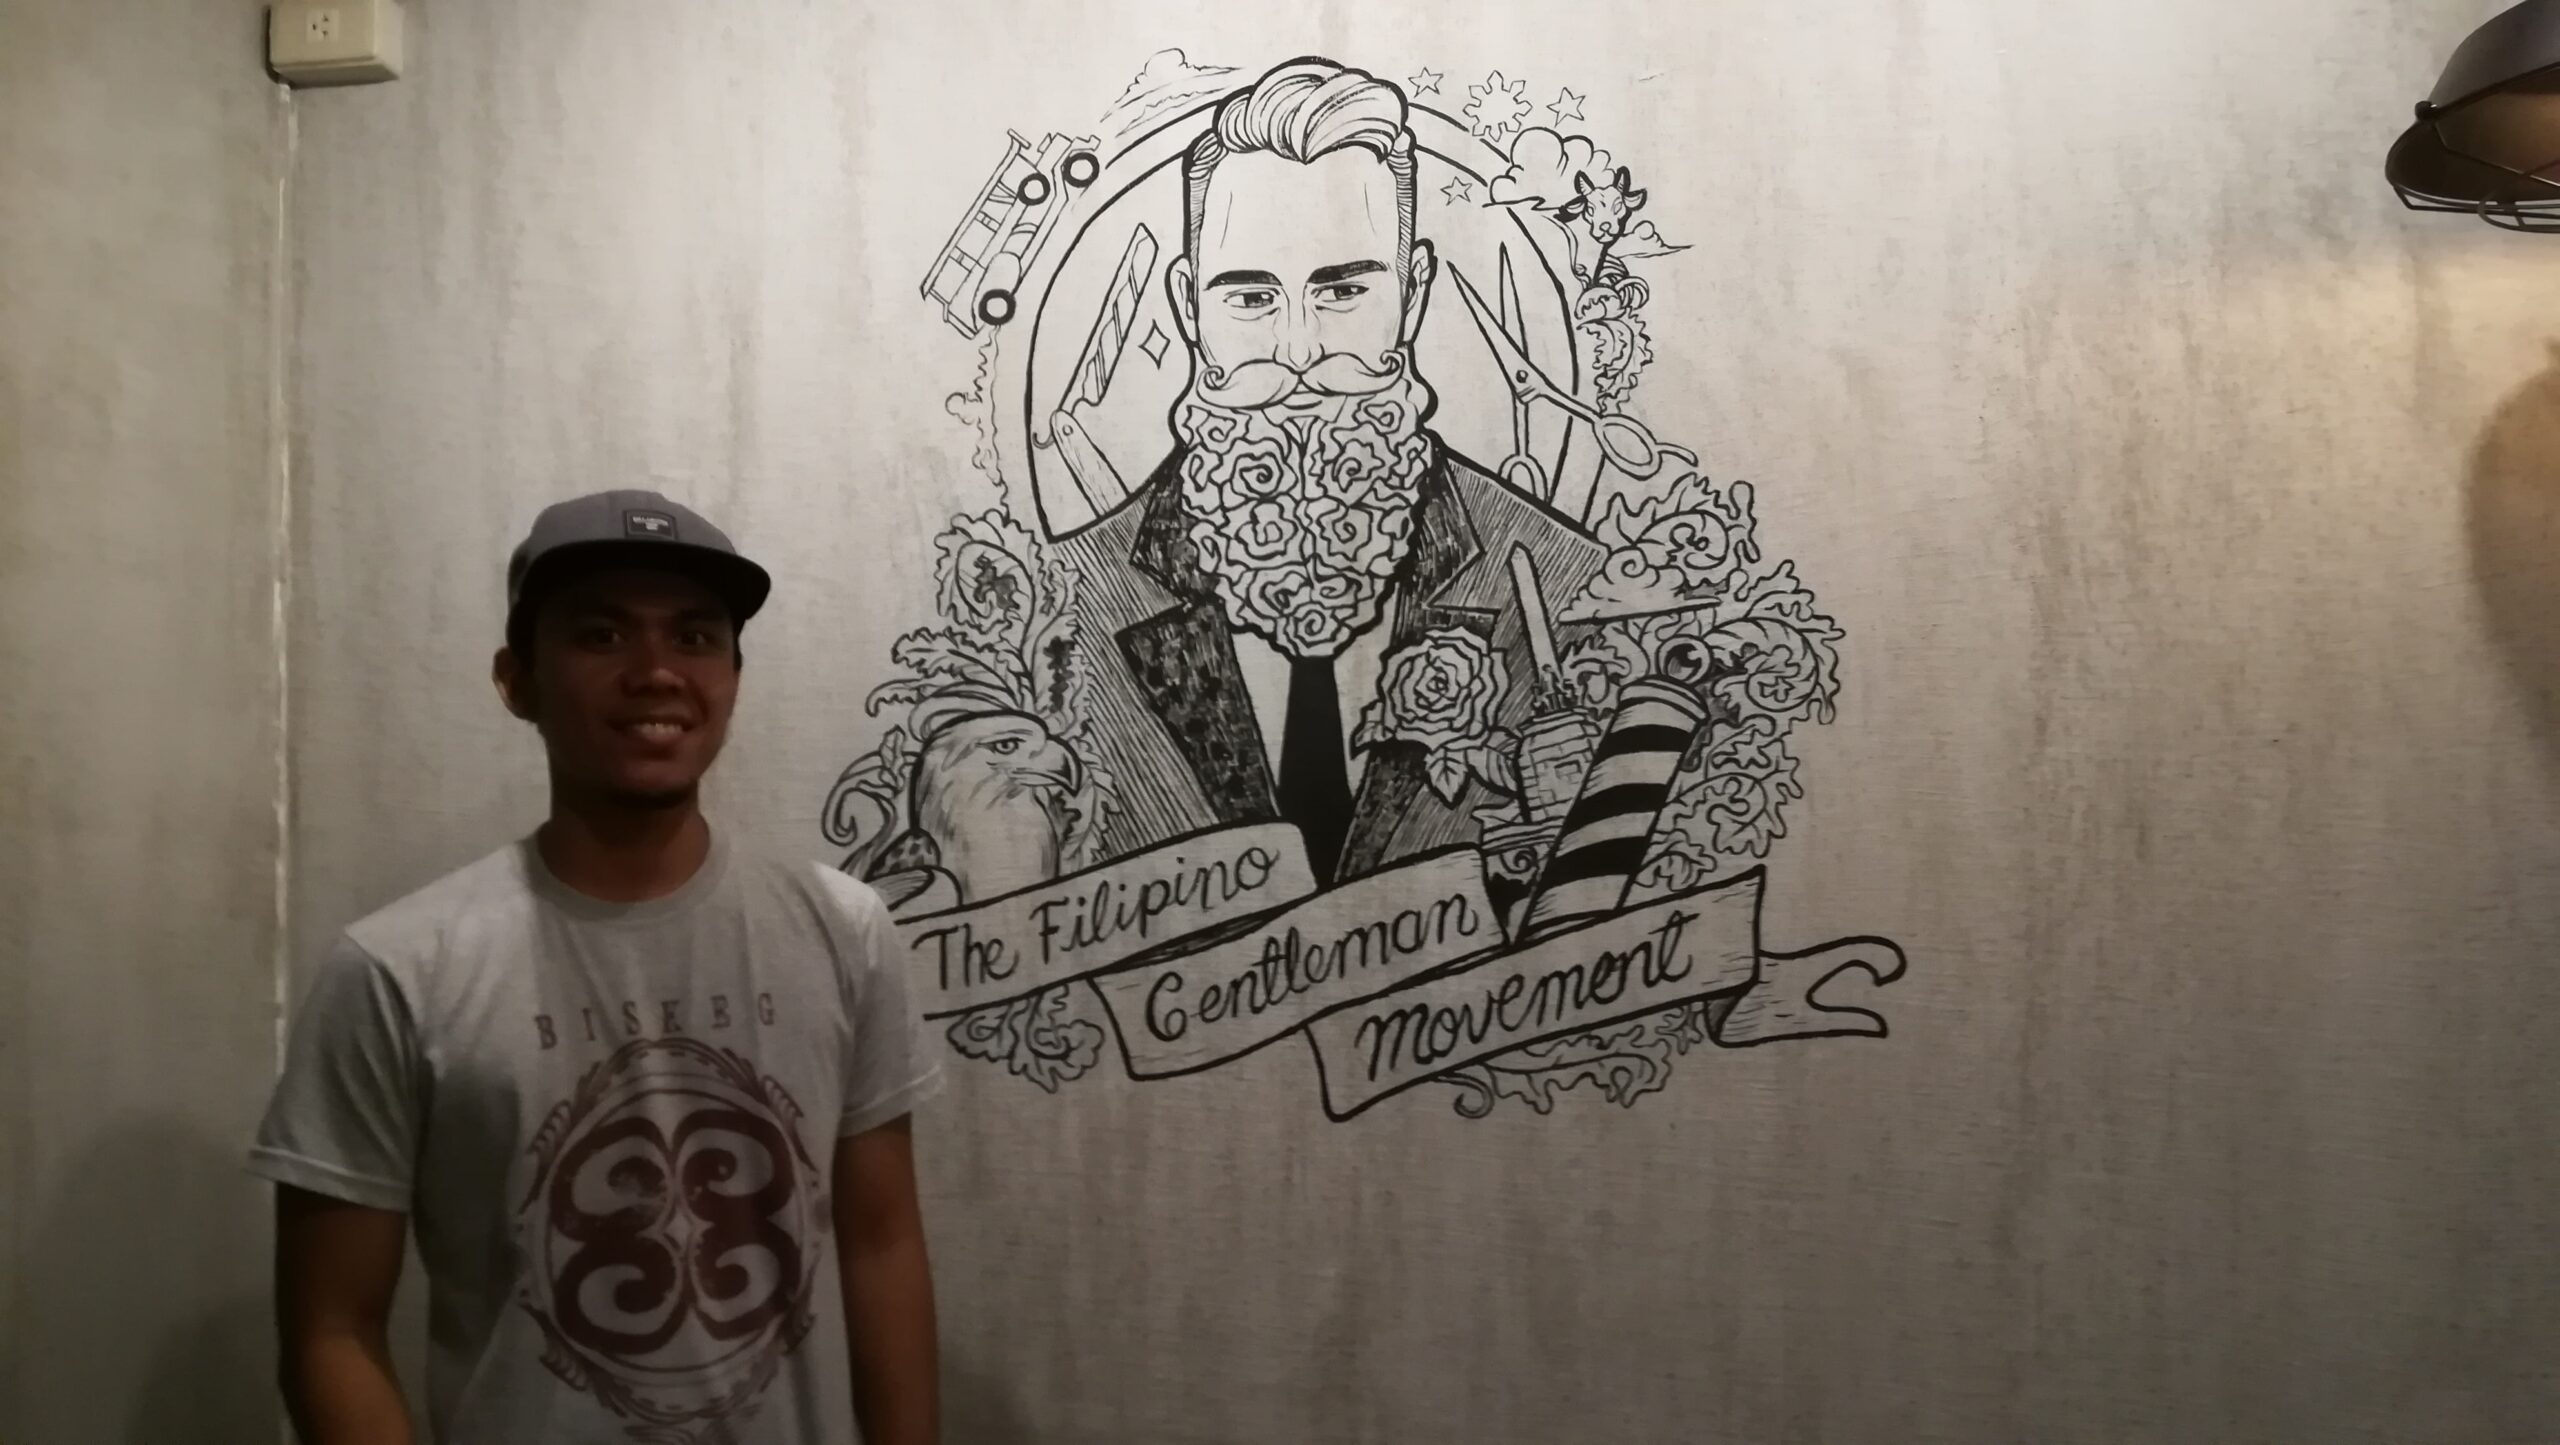 “The Filipino Gentleman” Mural by Mel Casipit